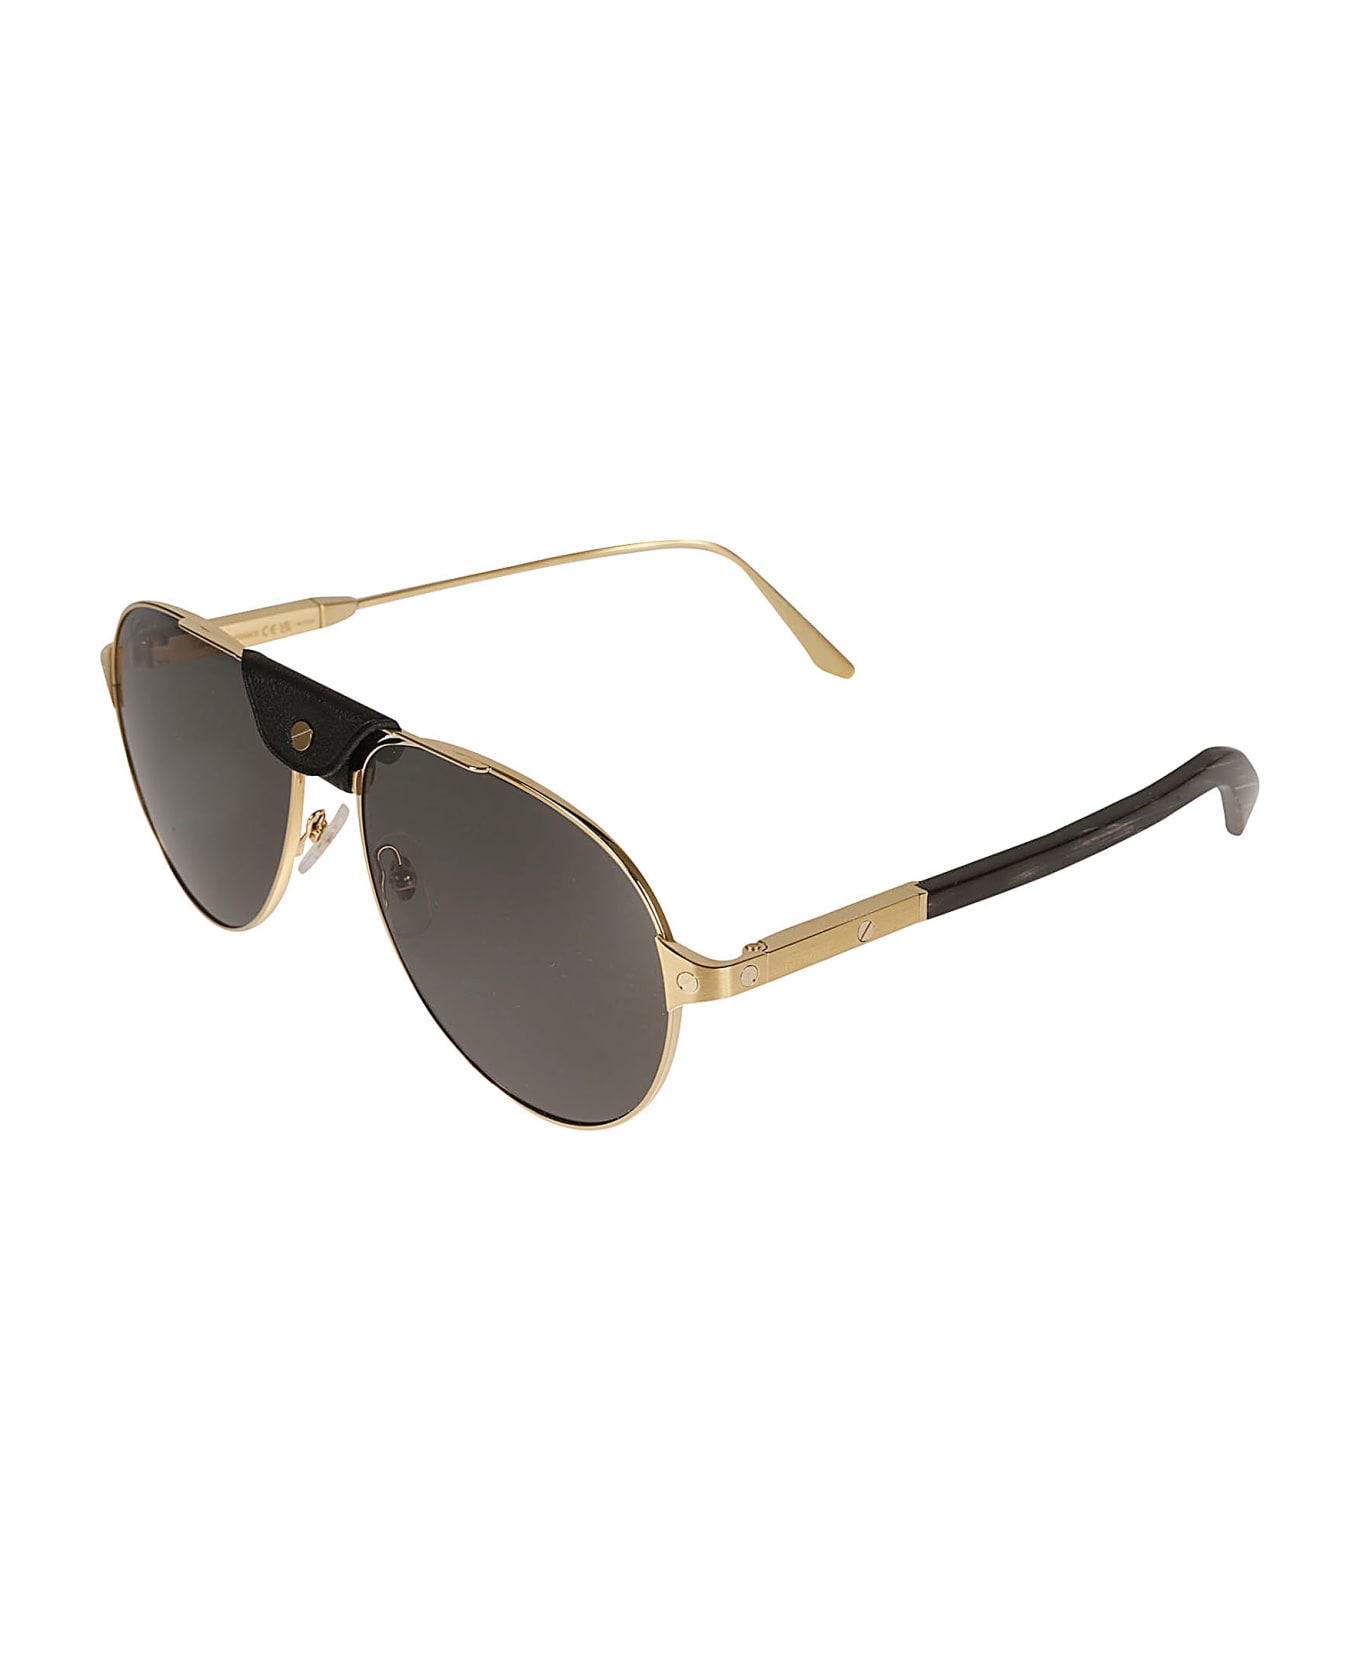 Cartier Eyewear Aviator Classic Sunglasses - Gold